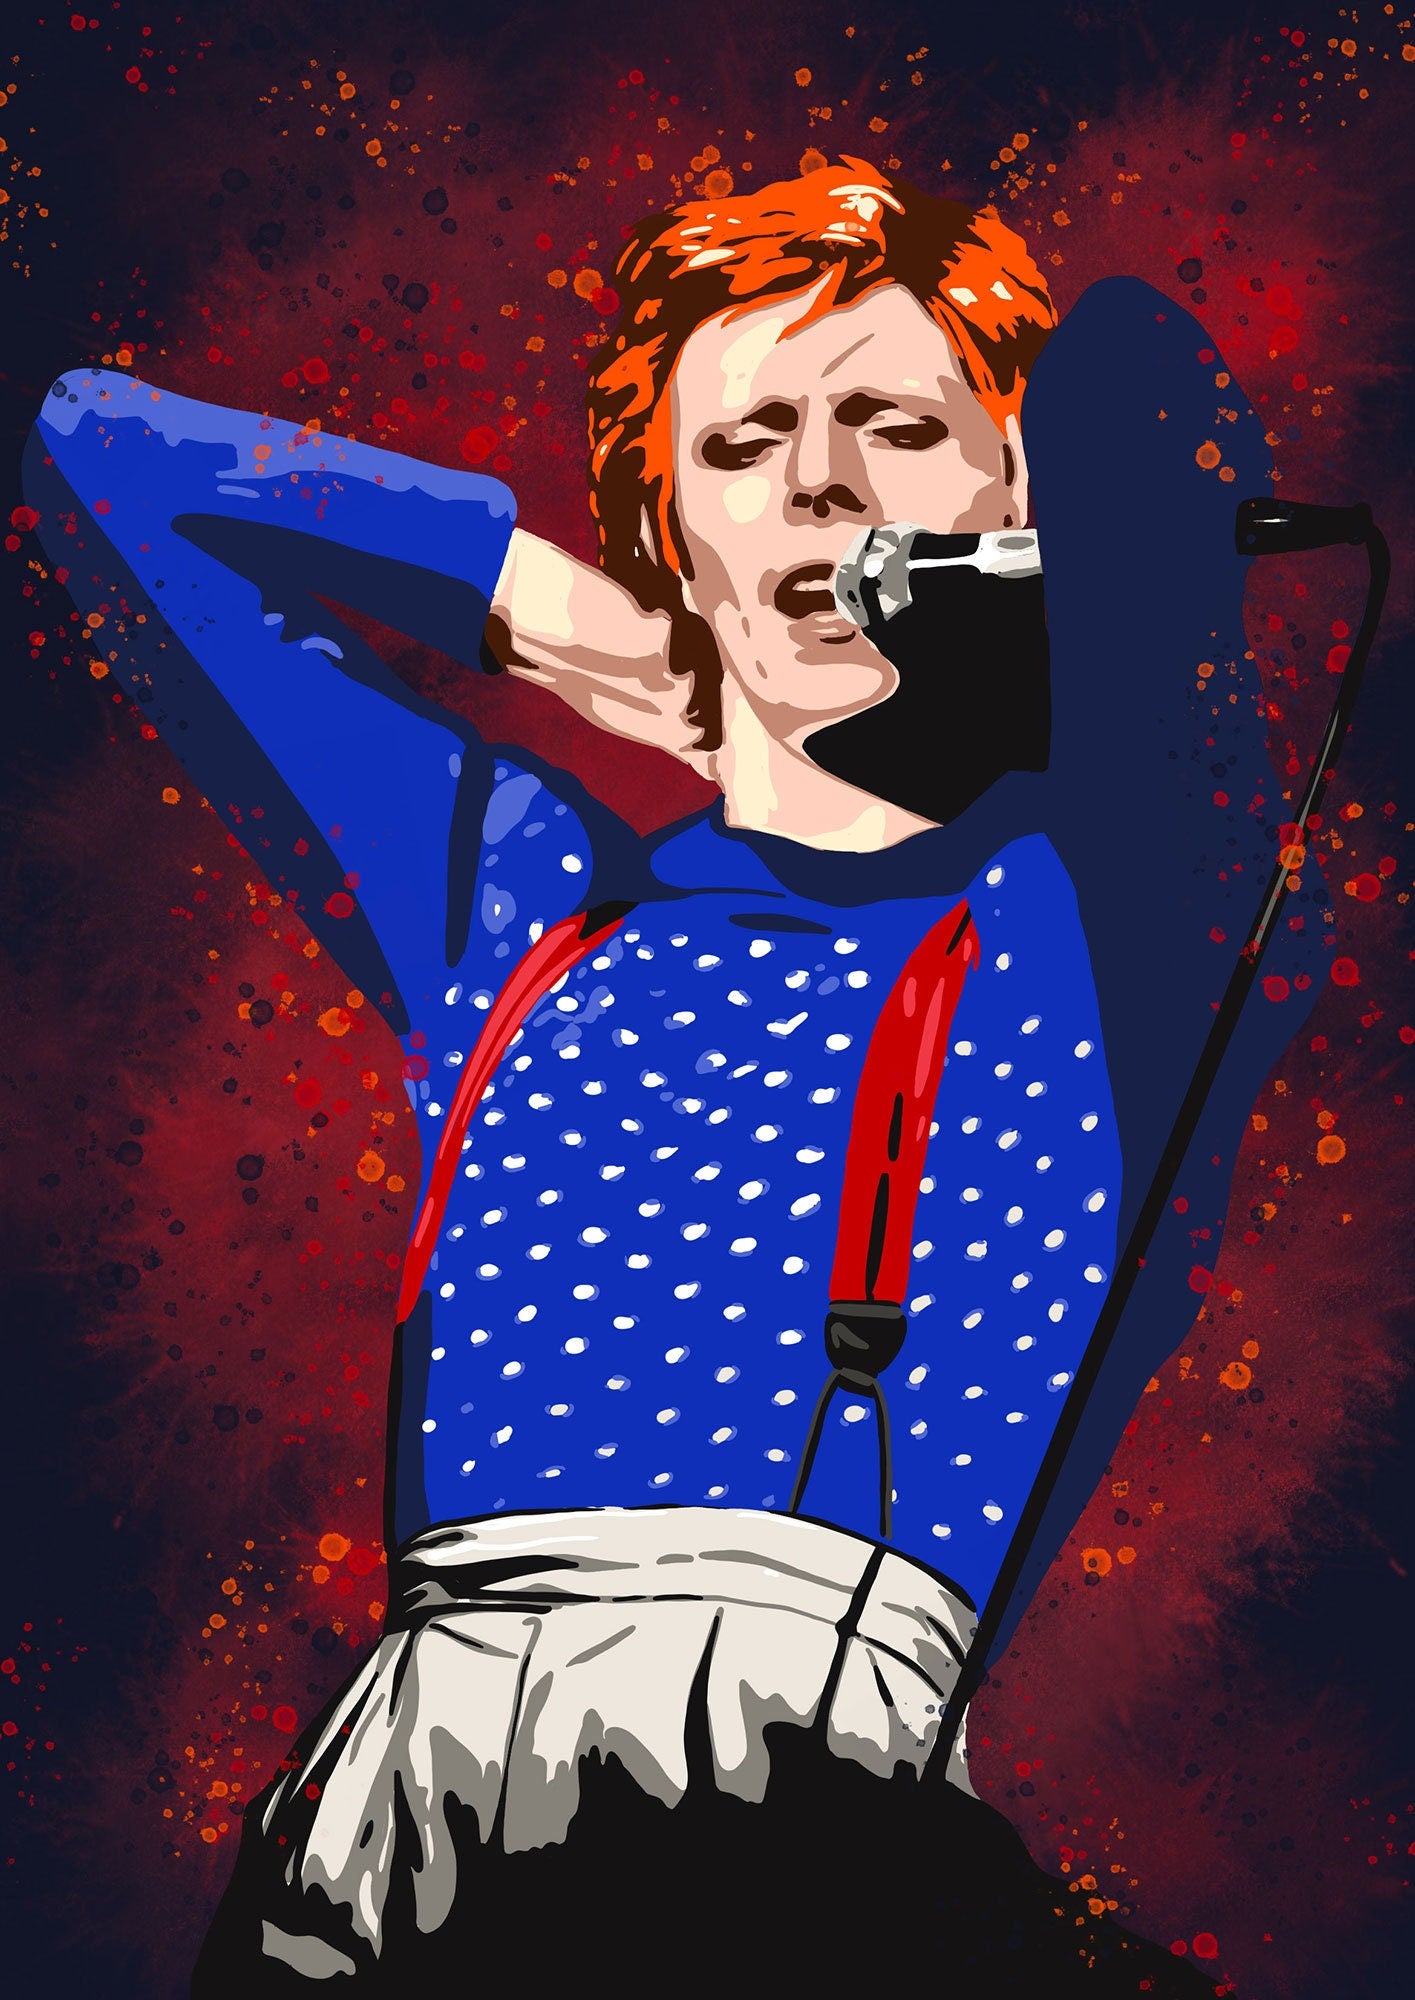 David Bowie art print unframed, David Bowie Poster, Bowie Wall Art, Bowie fan gift, pop art, music poster, Diamond Dogs, David Live, 1974